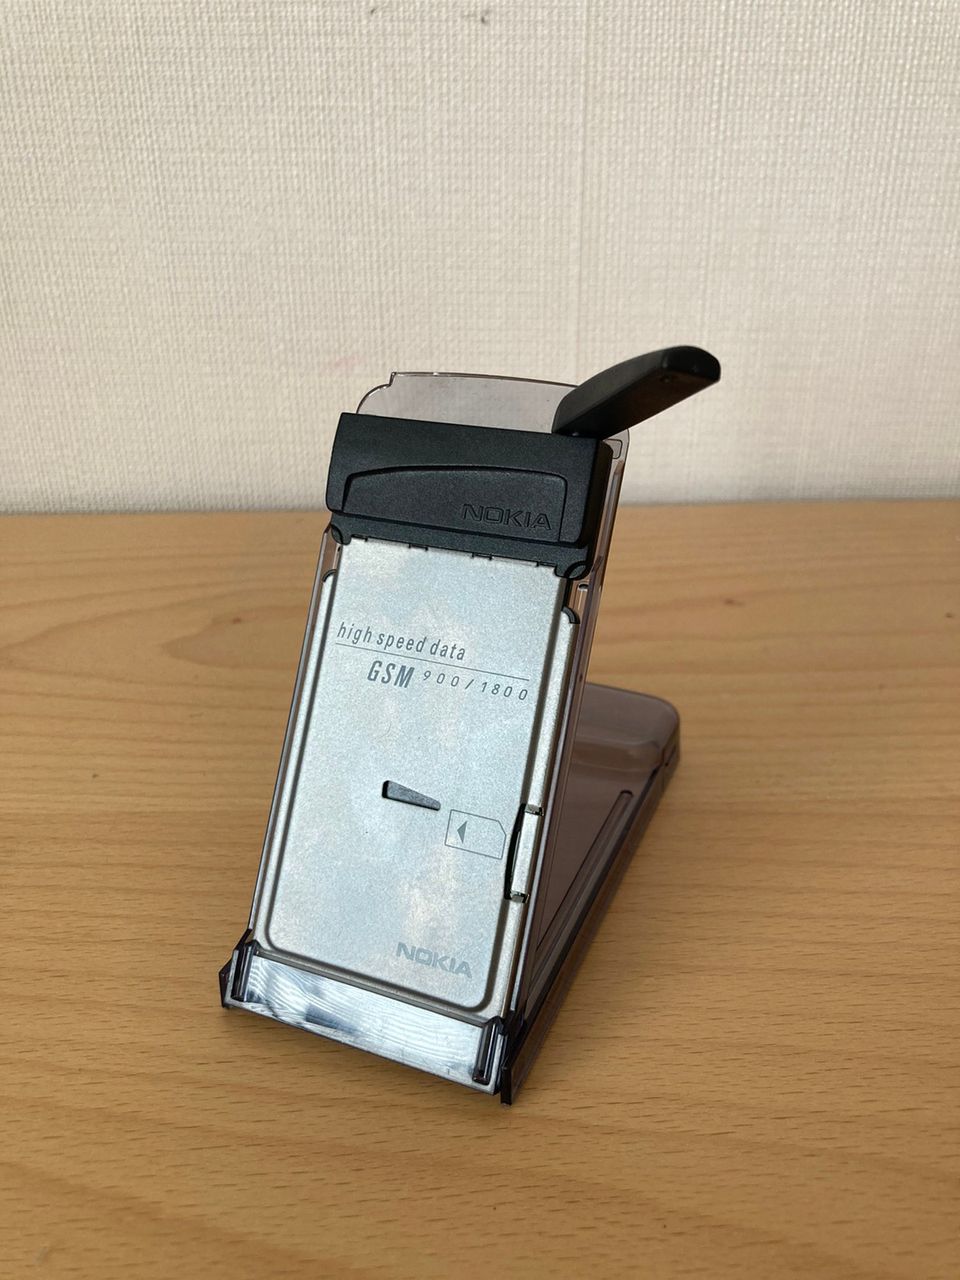 Nokia CardPhone 2.0